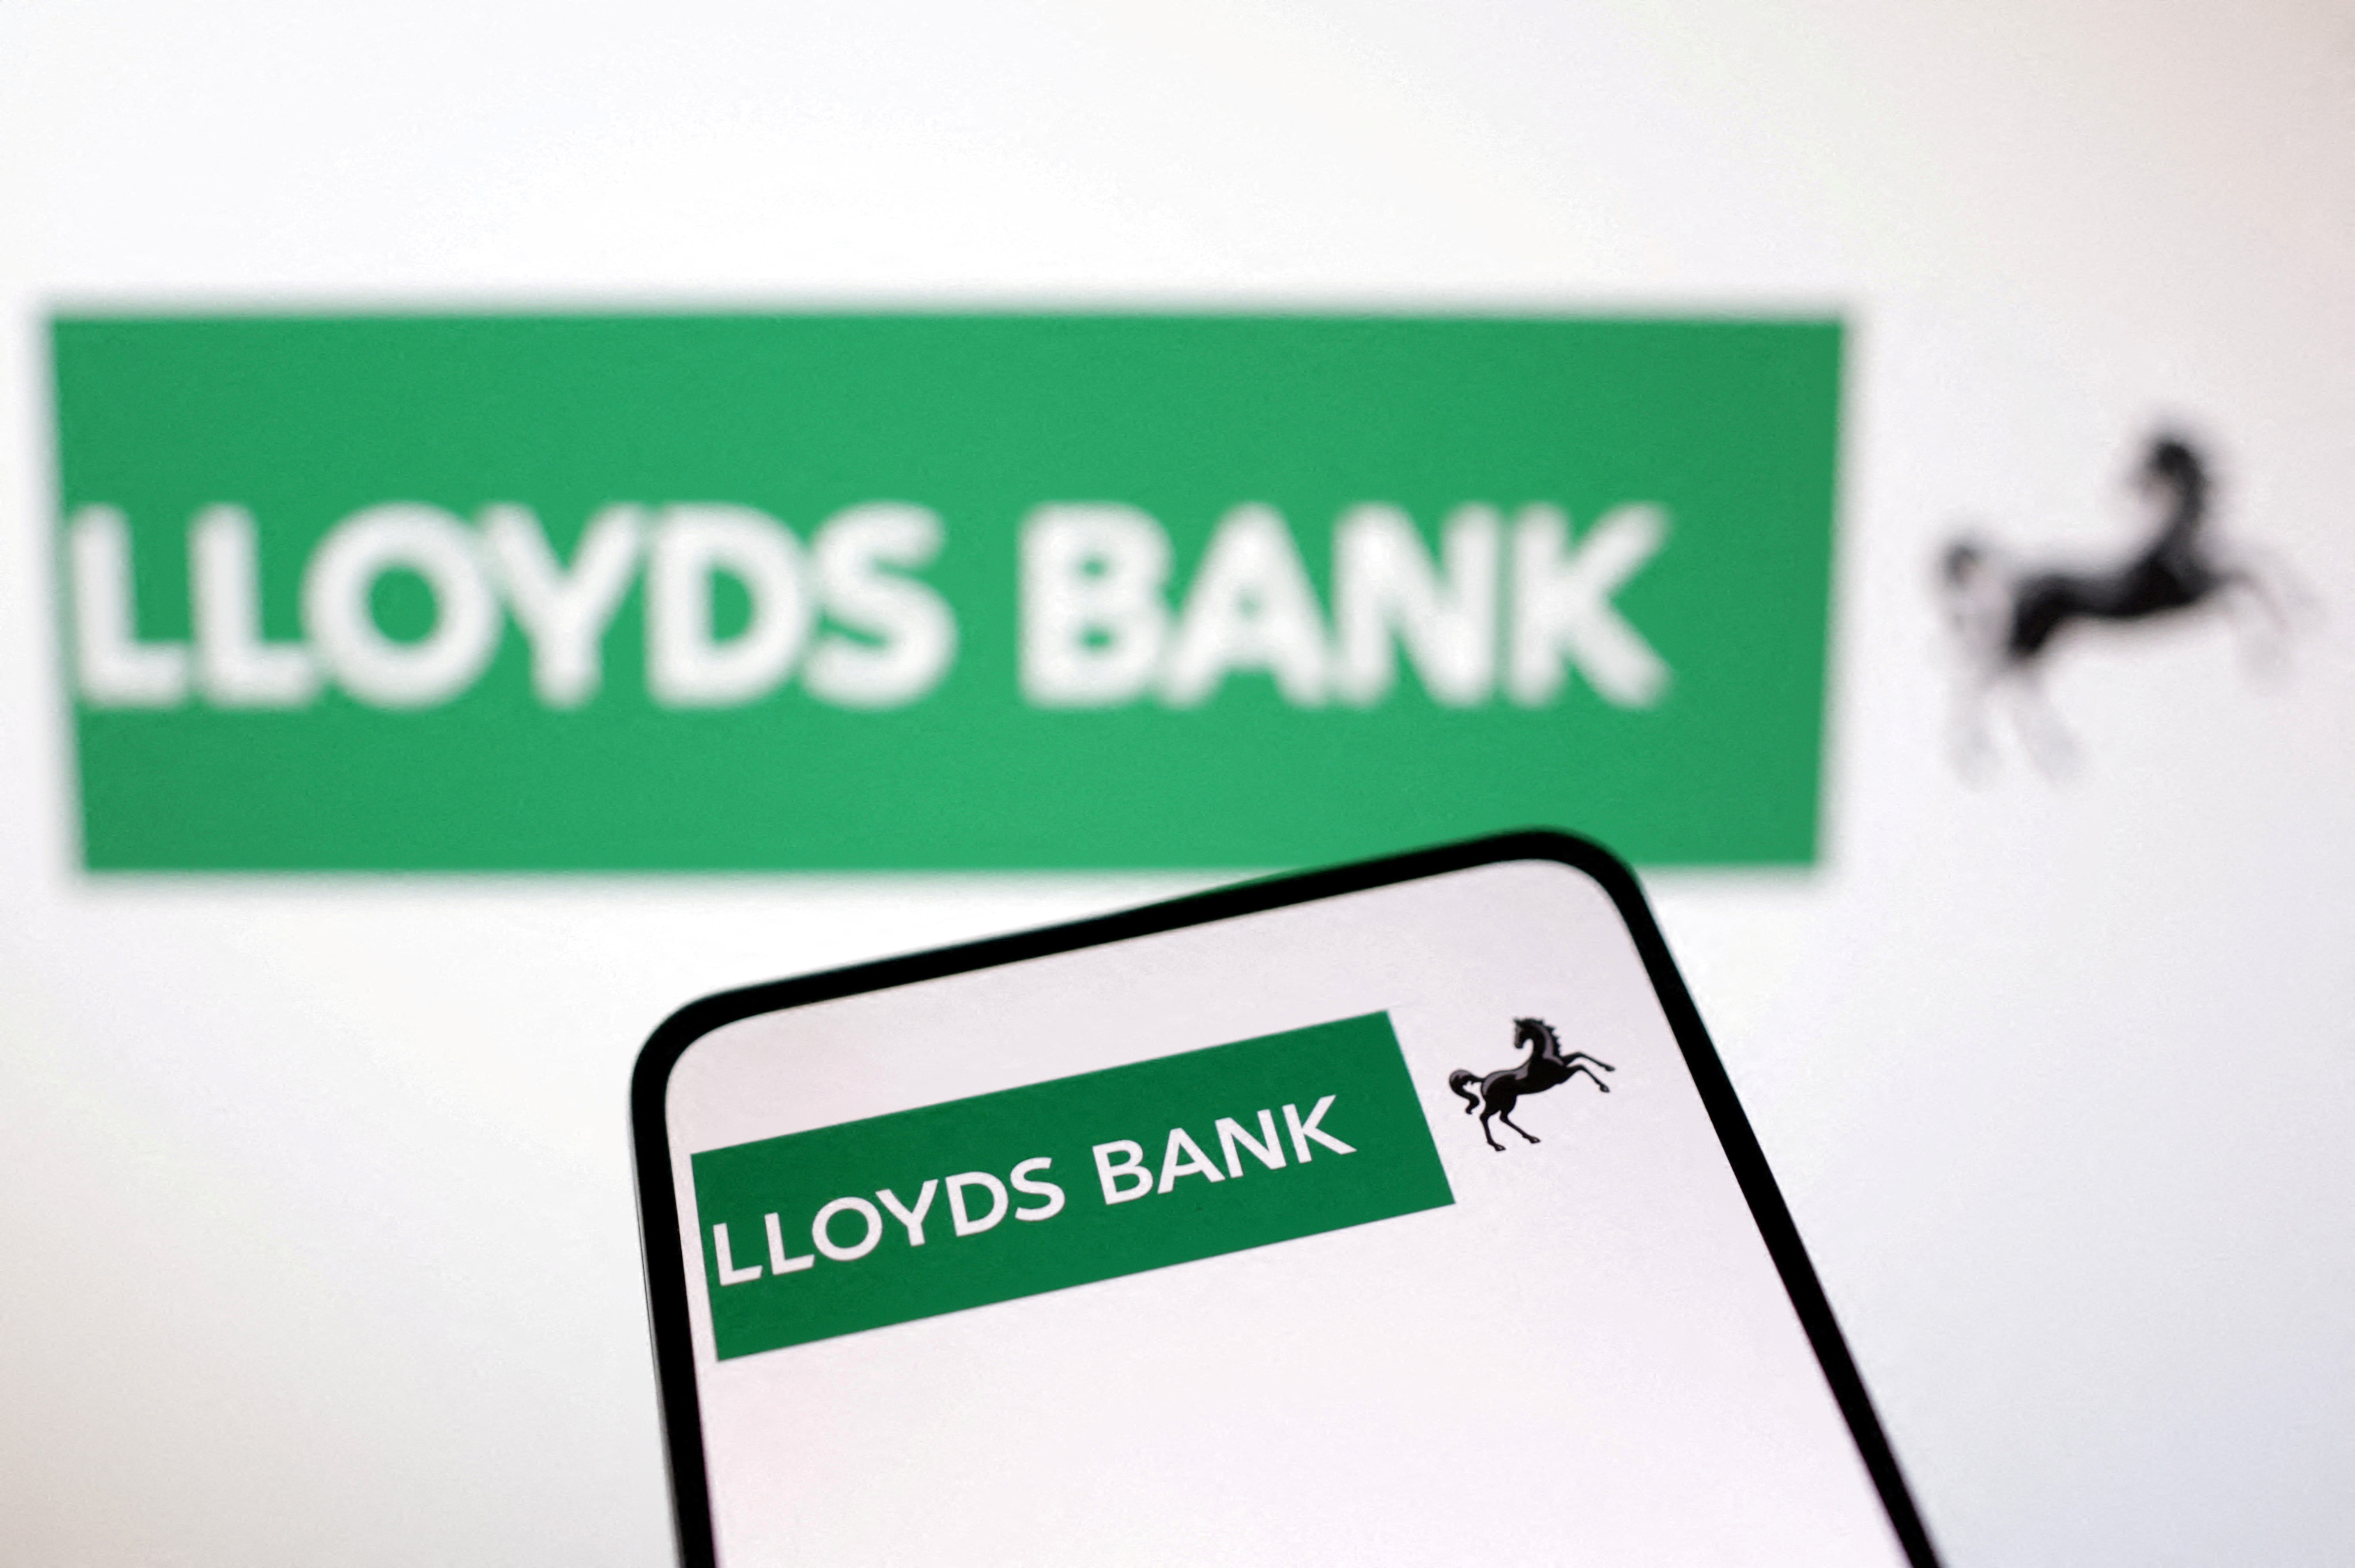 Illustration shows Lloyds Bank logo